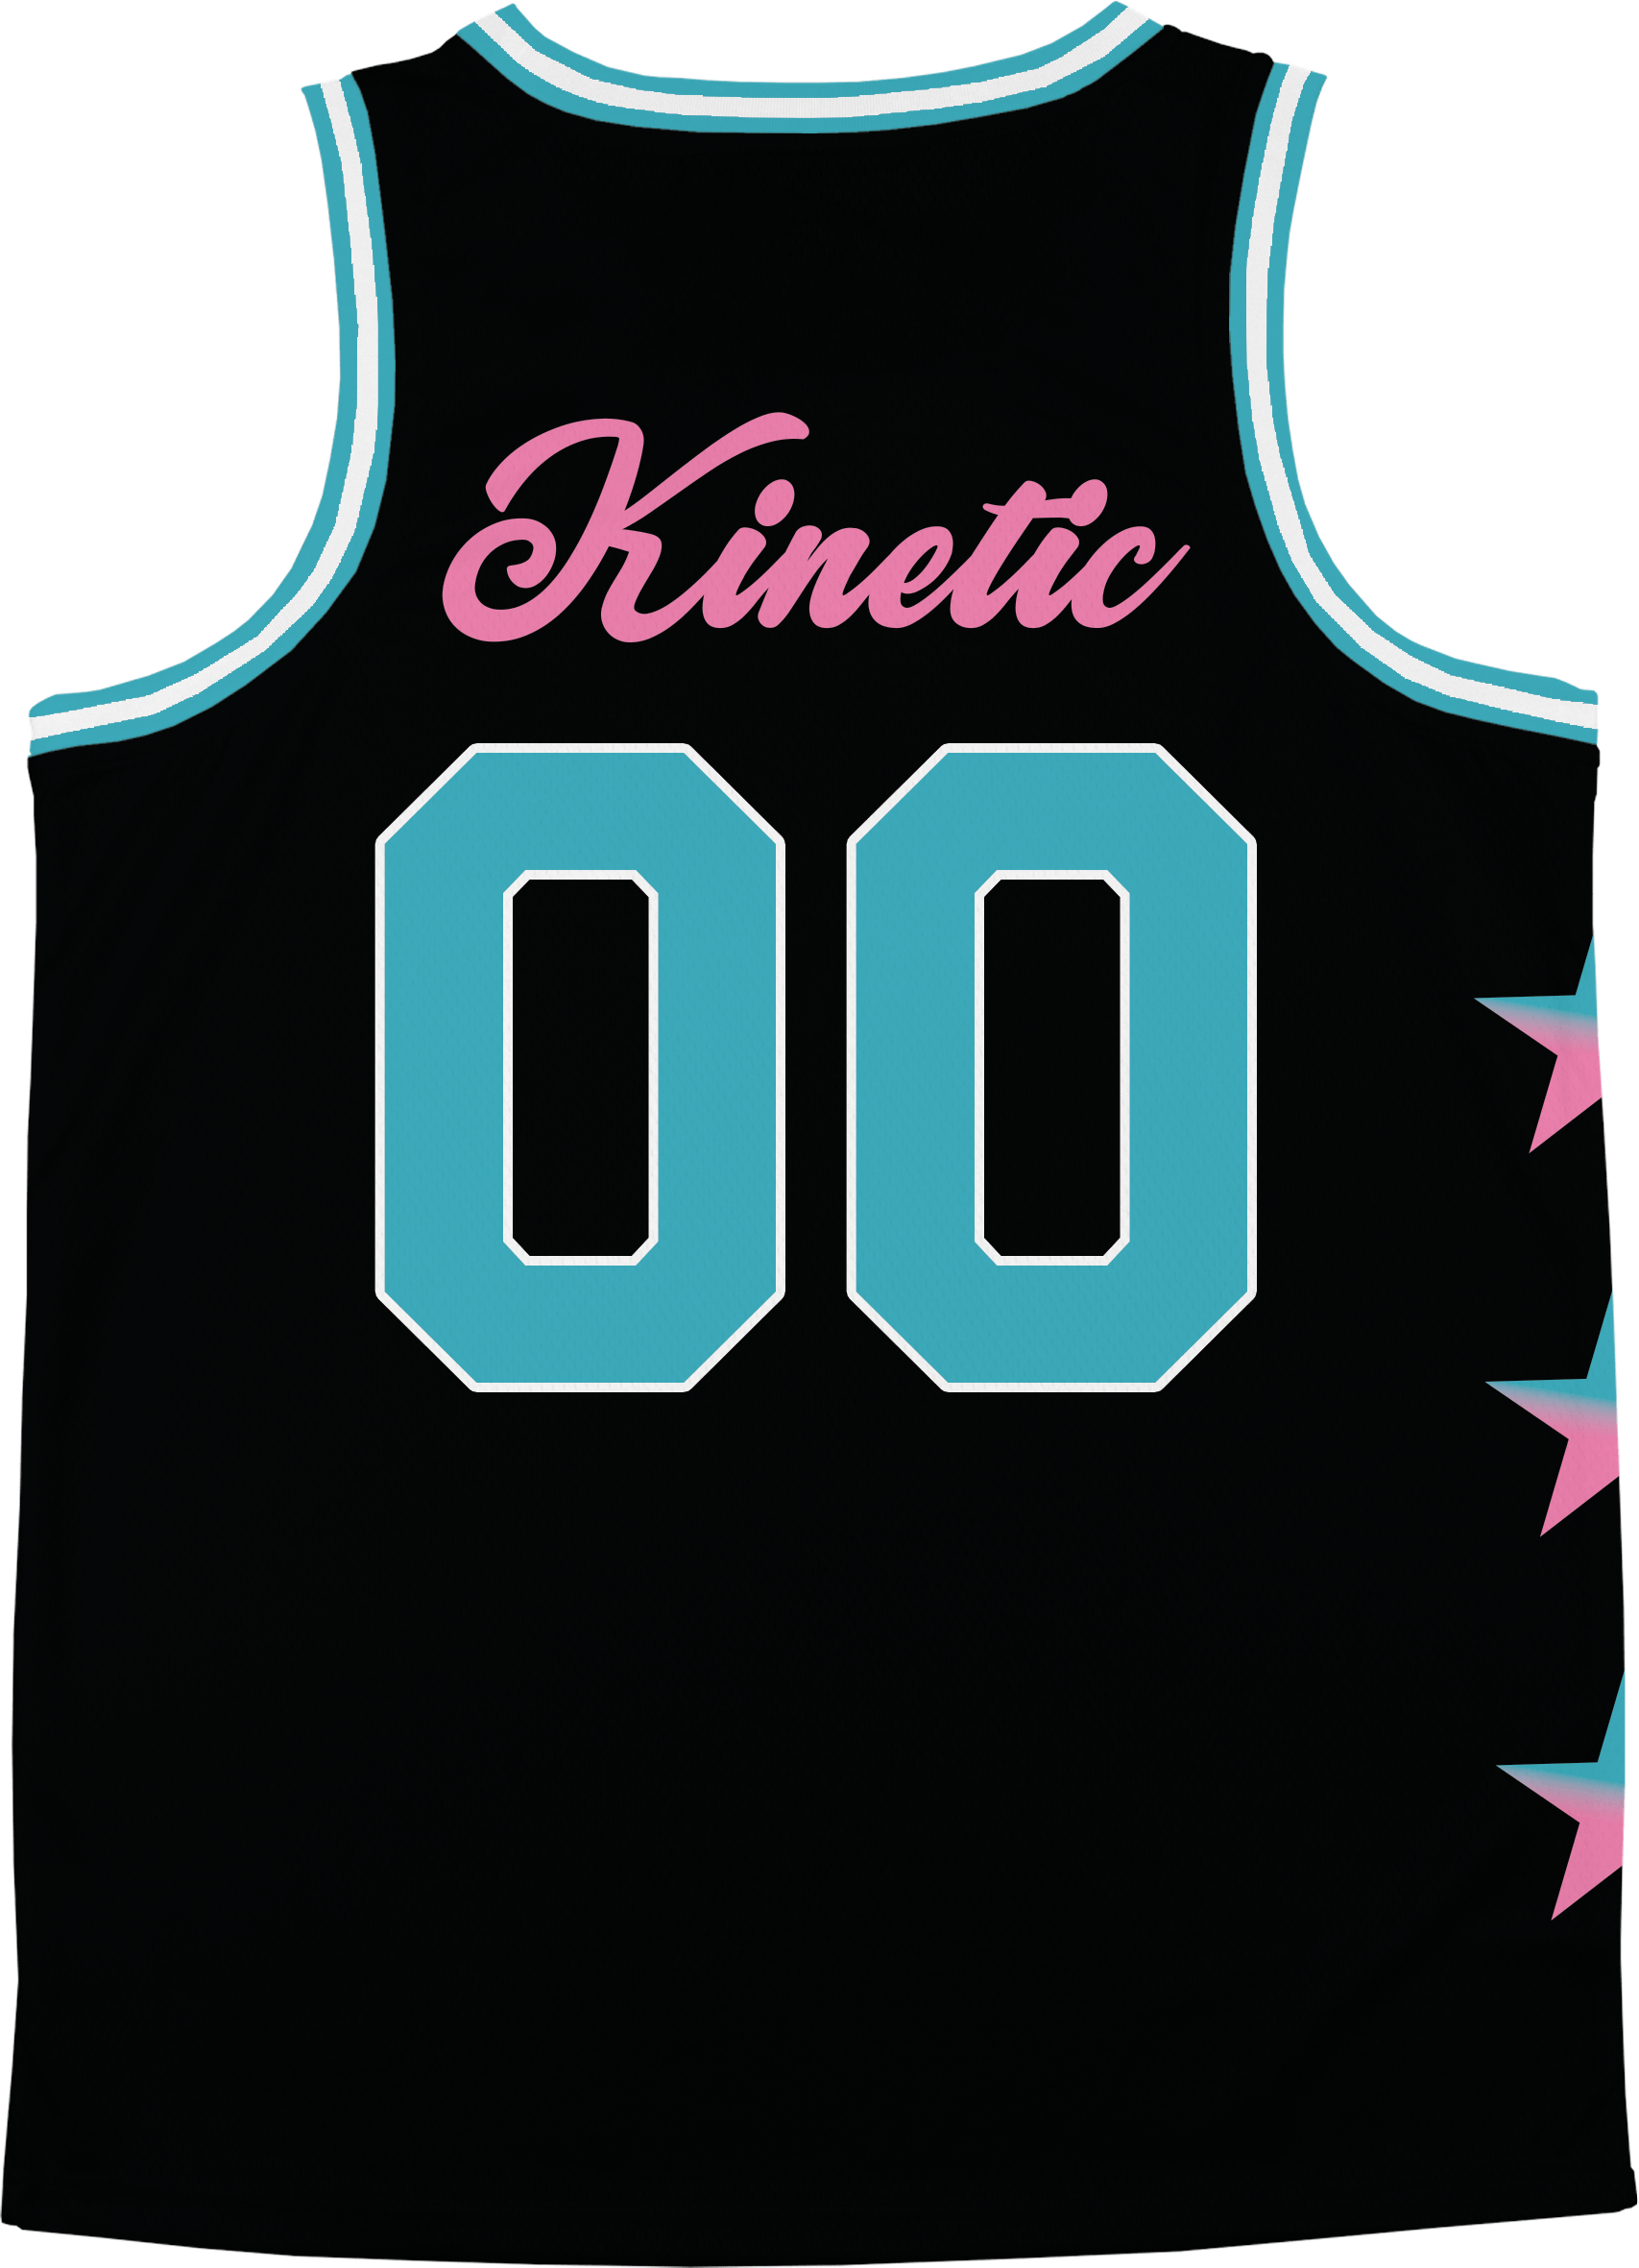 Delta Gamma - Cotton Candy Basketball Jersey - Kinetic Society